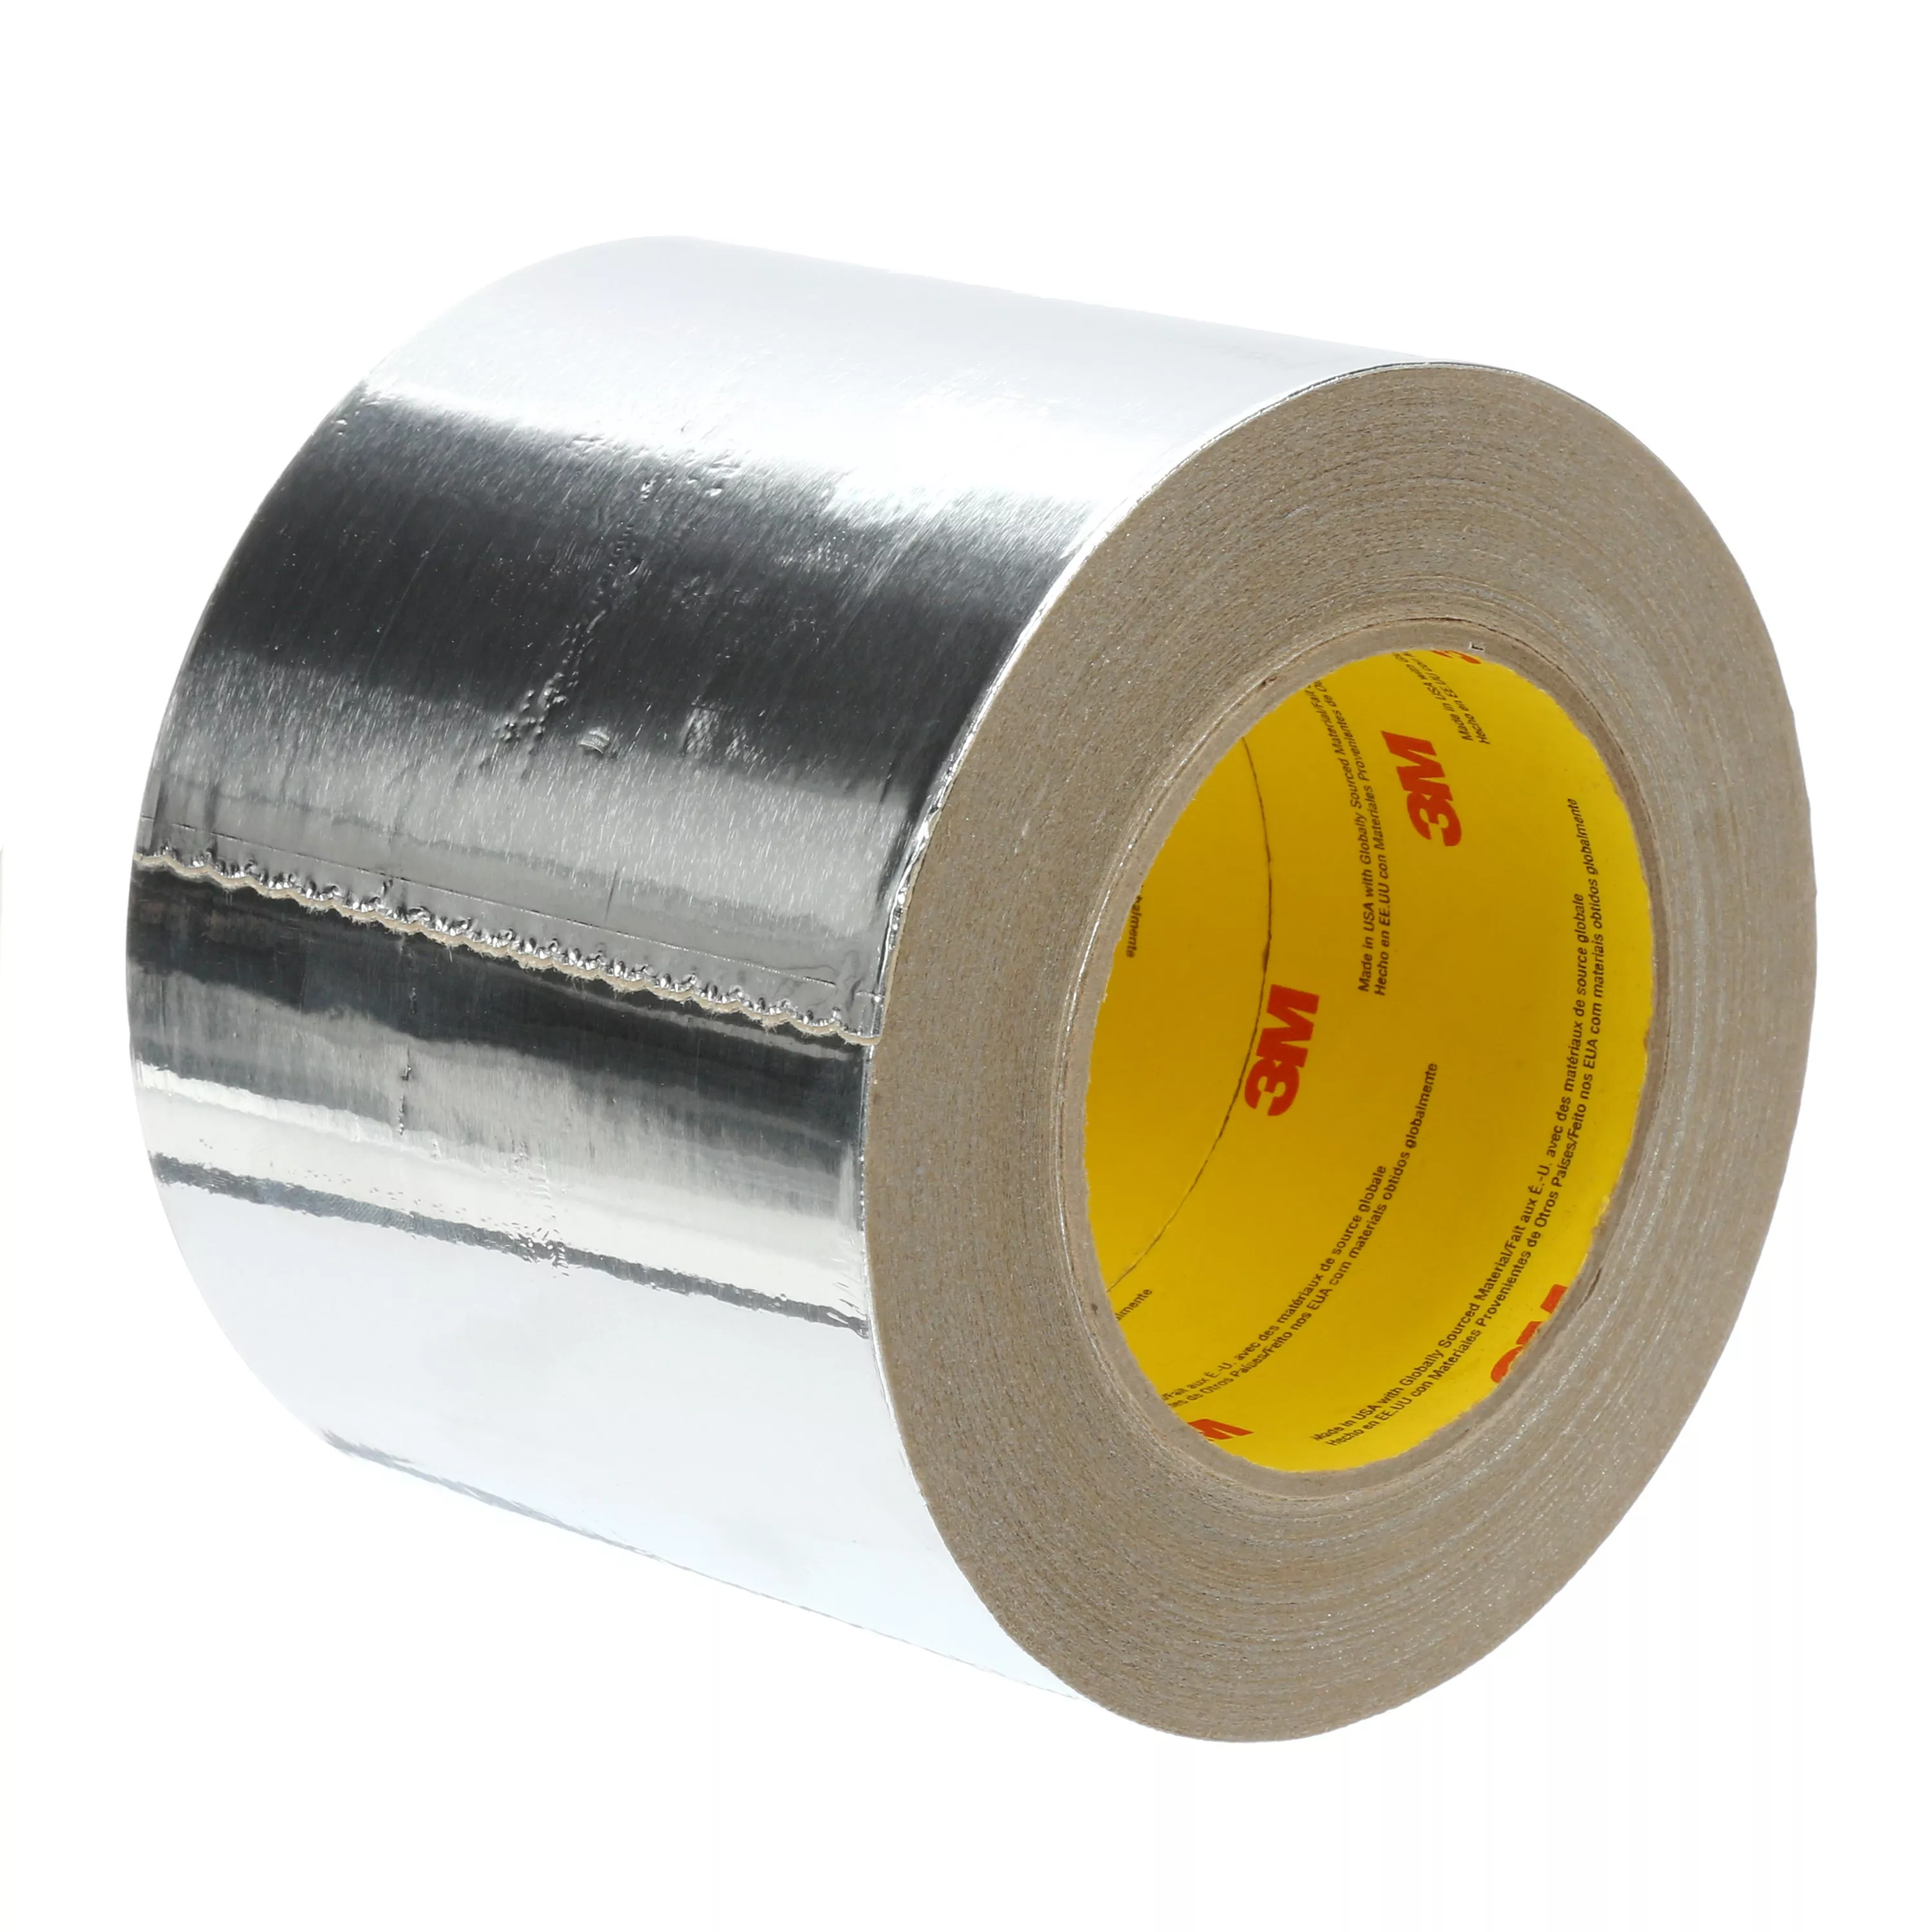 3M™ Venture Tape™ Aluminum Foil Tape 1520CW, Silver, 99 mm x 45.7 m, 3.2
mil, 12 Rolls/Case